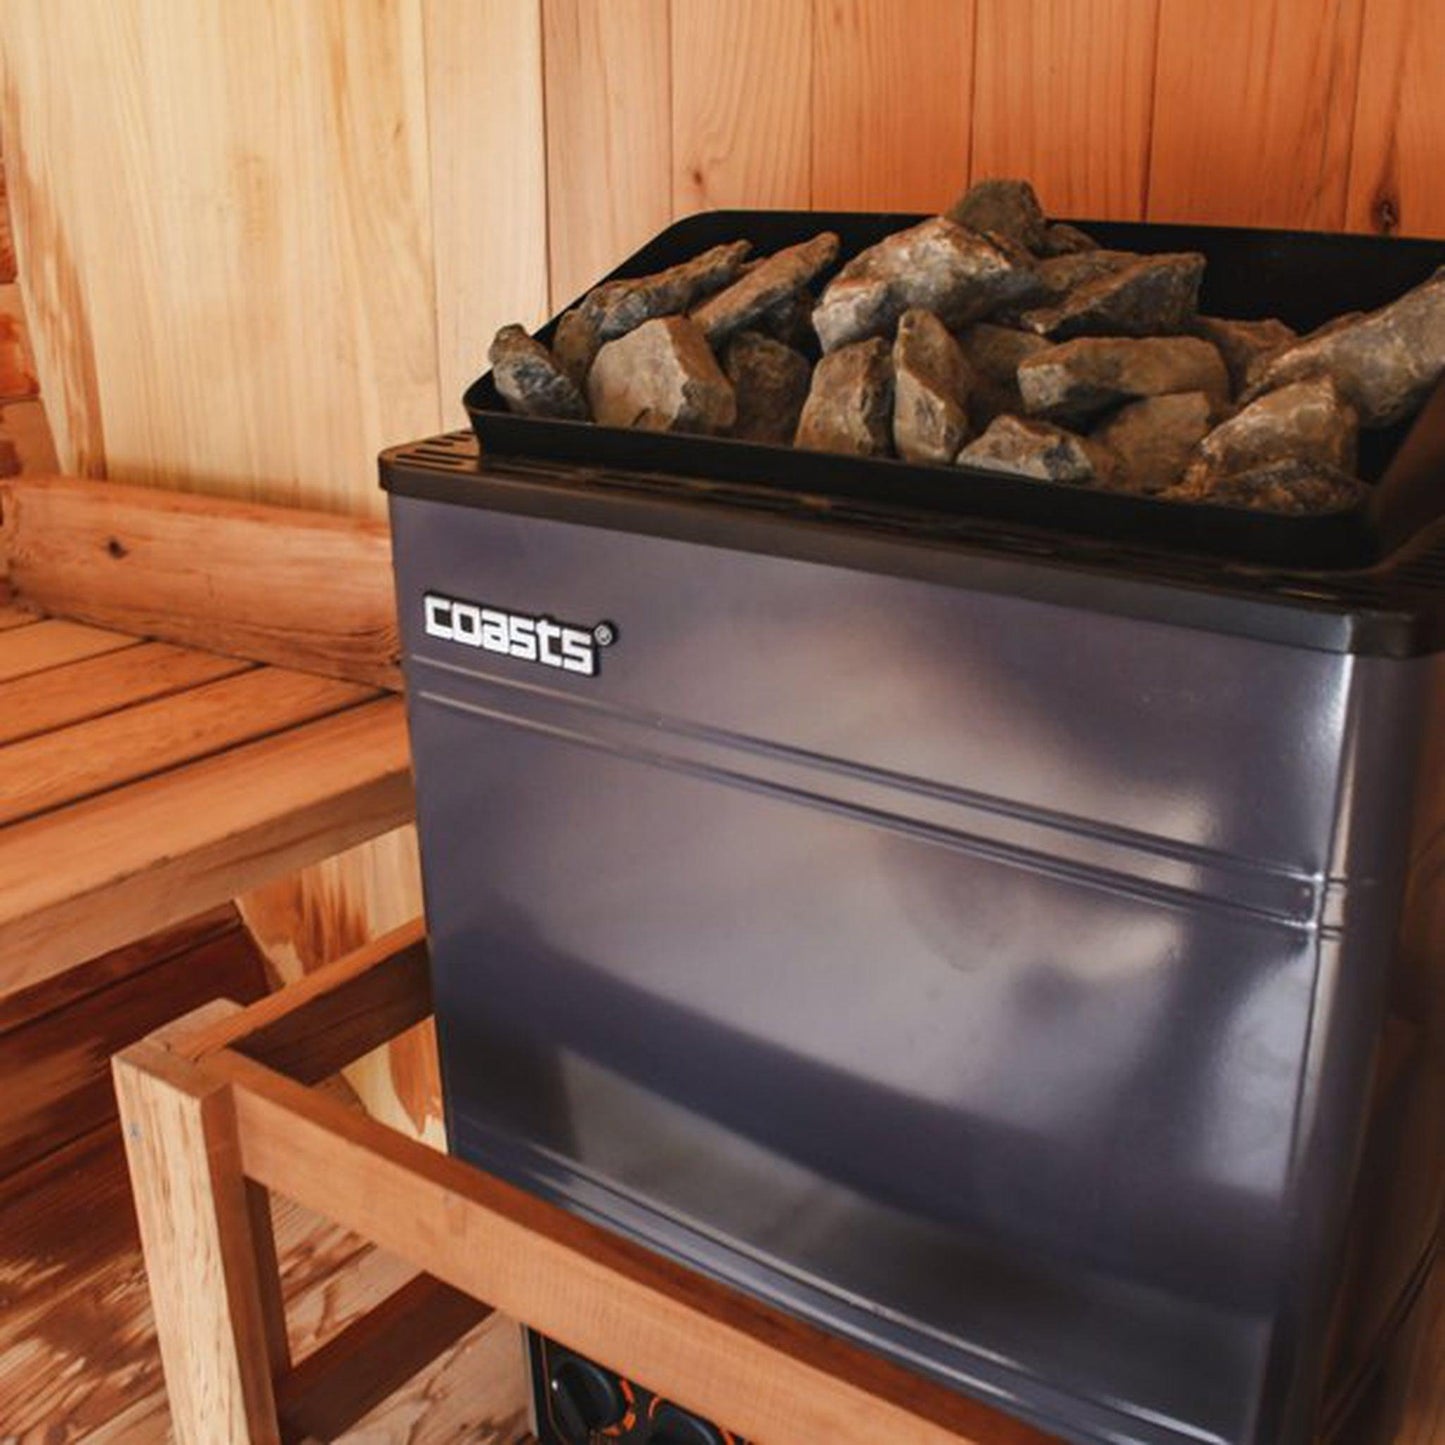 Aleko Coasts 9KW Sauna Heater With Inner Controller